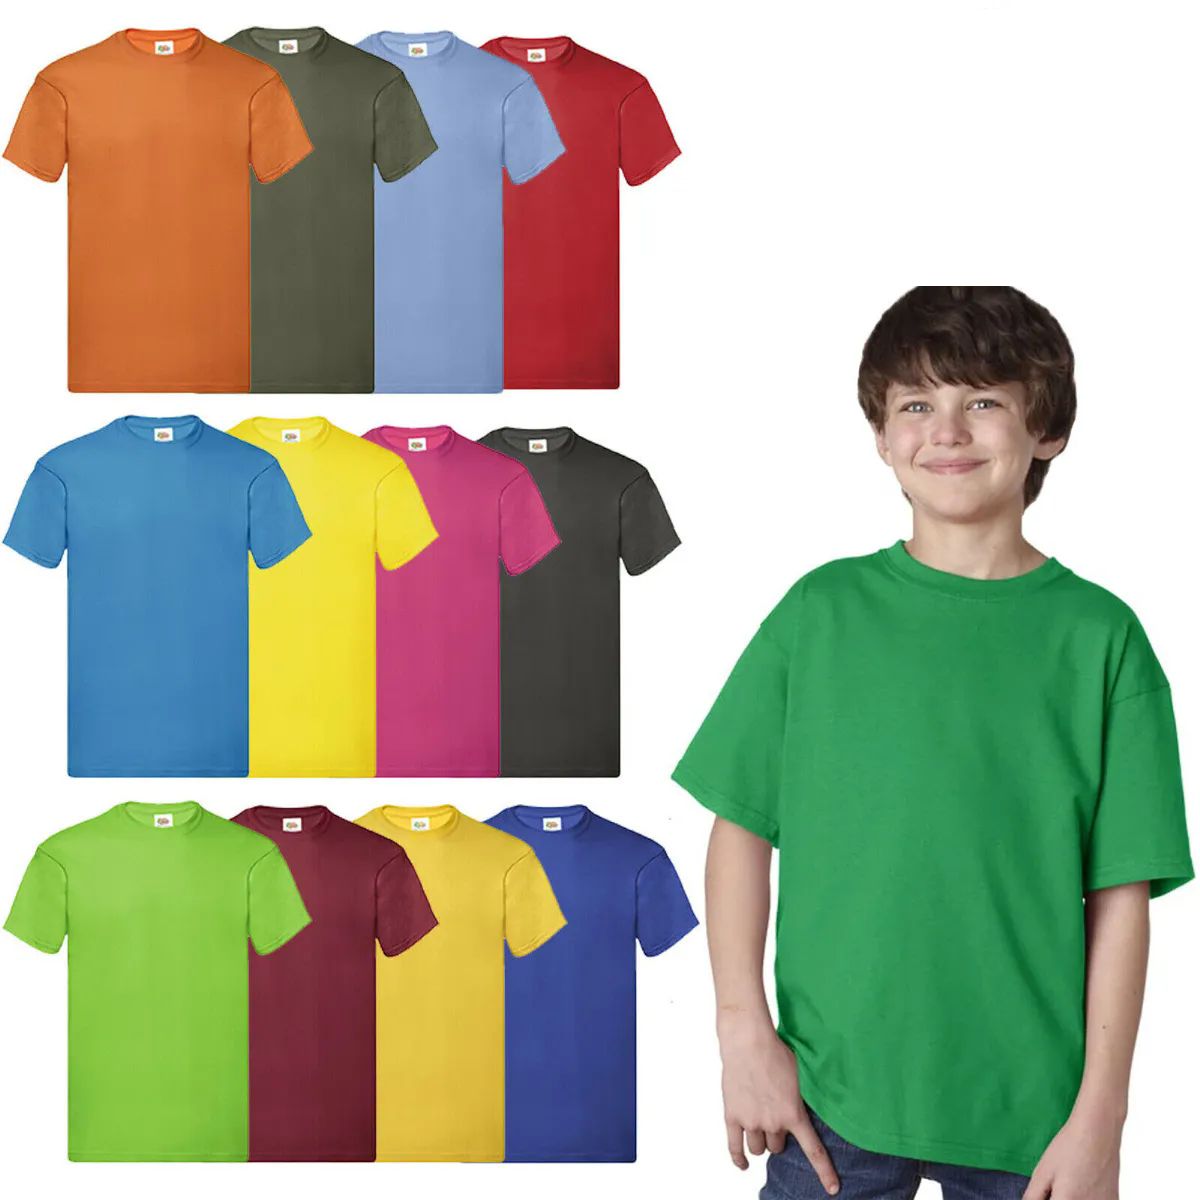 504 Wholesale Billion Hats Kids Youth Cotton Assorted Colors T Shirts Size M